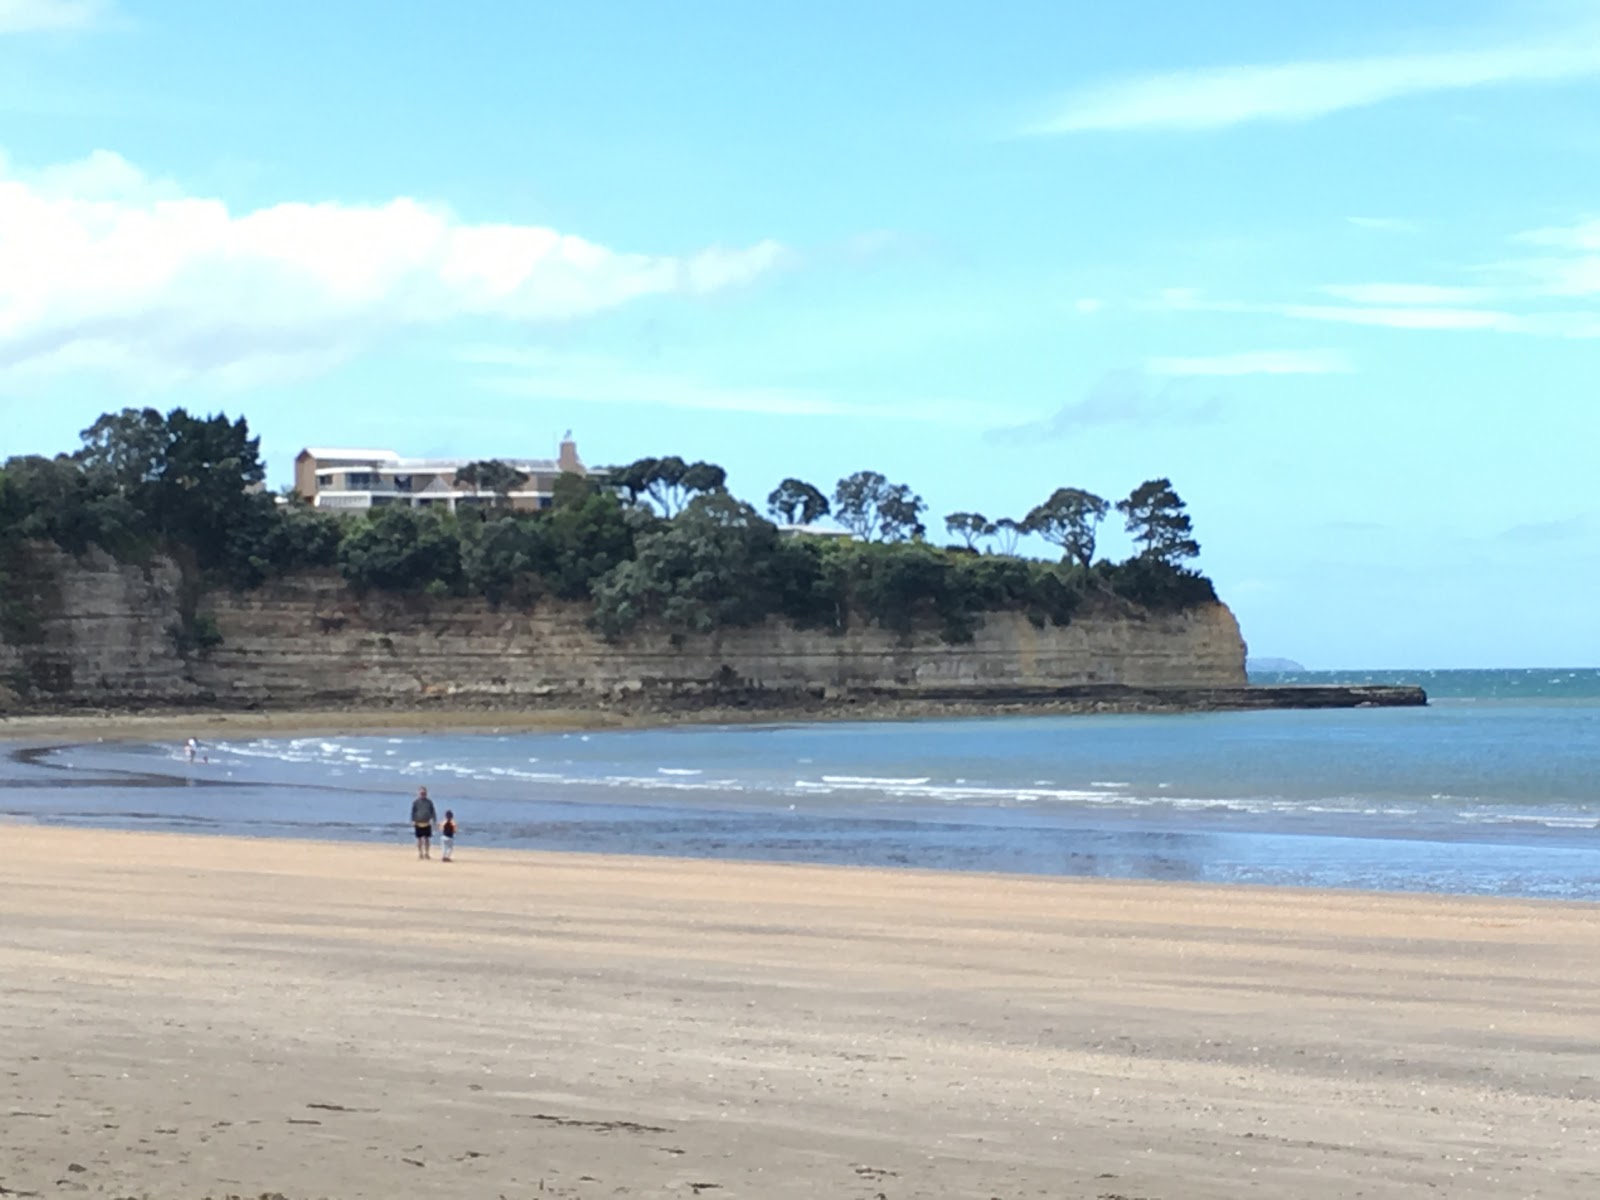 Foto de Browns Bay Beach - lugar popular entre os apreciadores de relaxamento